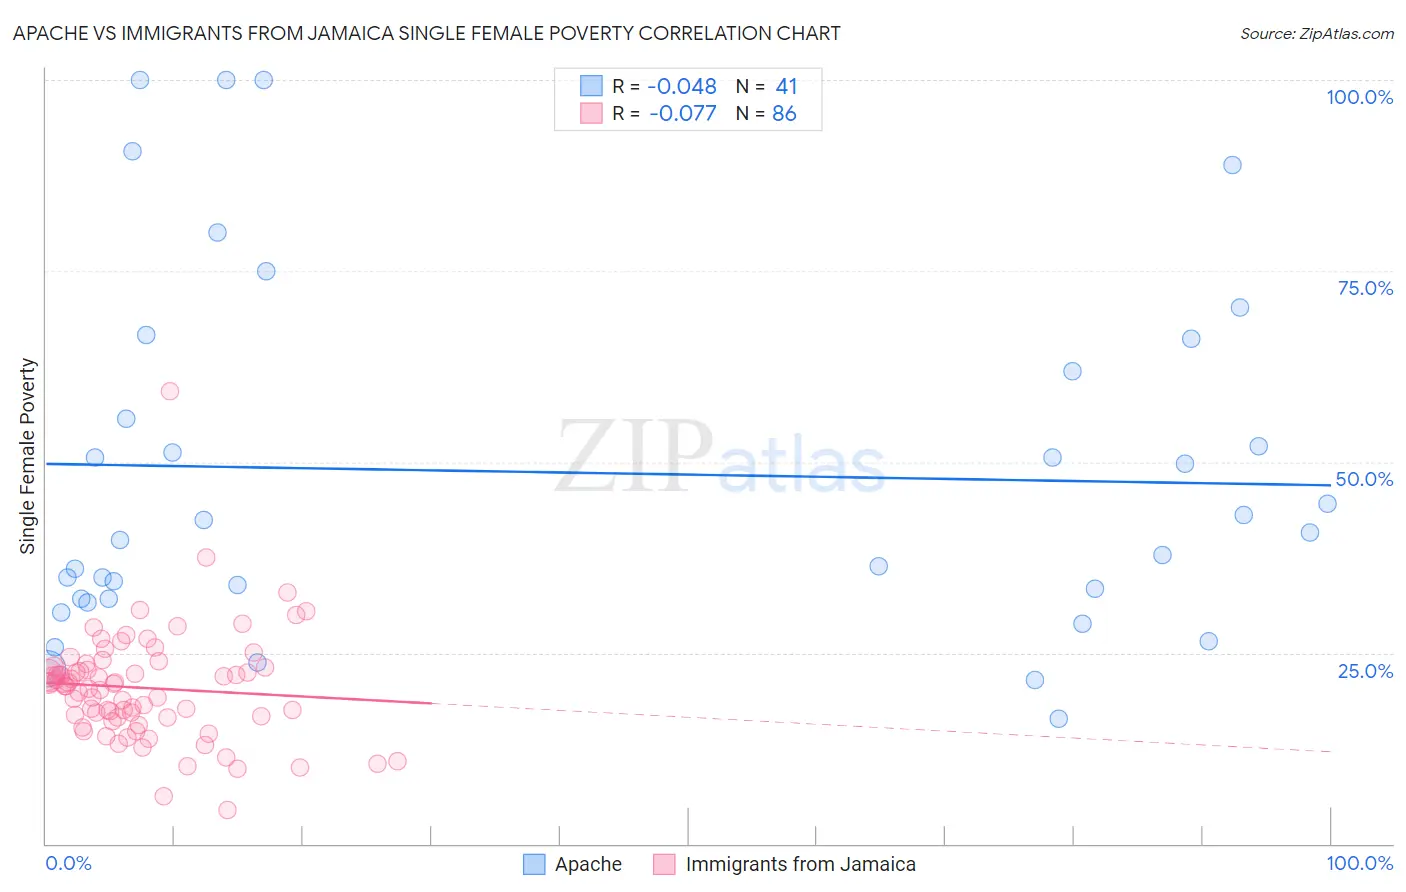 Apache vs Immigrants from Jamaica Single Female Poverty